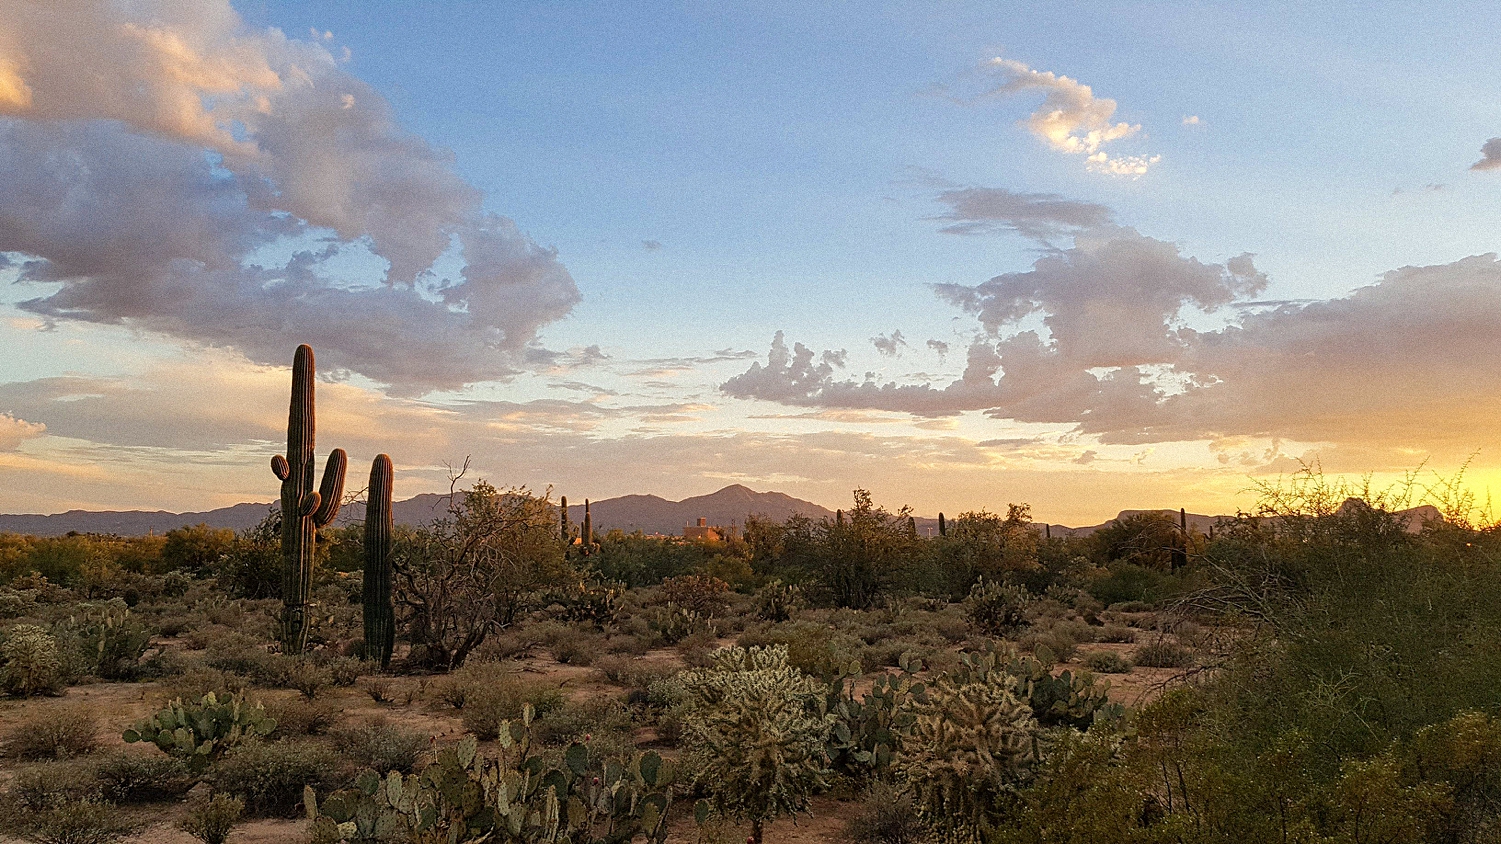 Cactus and mountain landscape at sunset Arizona